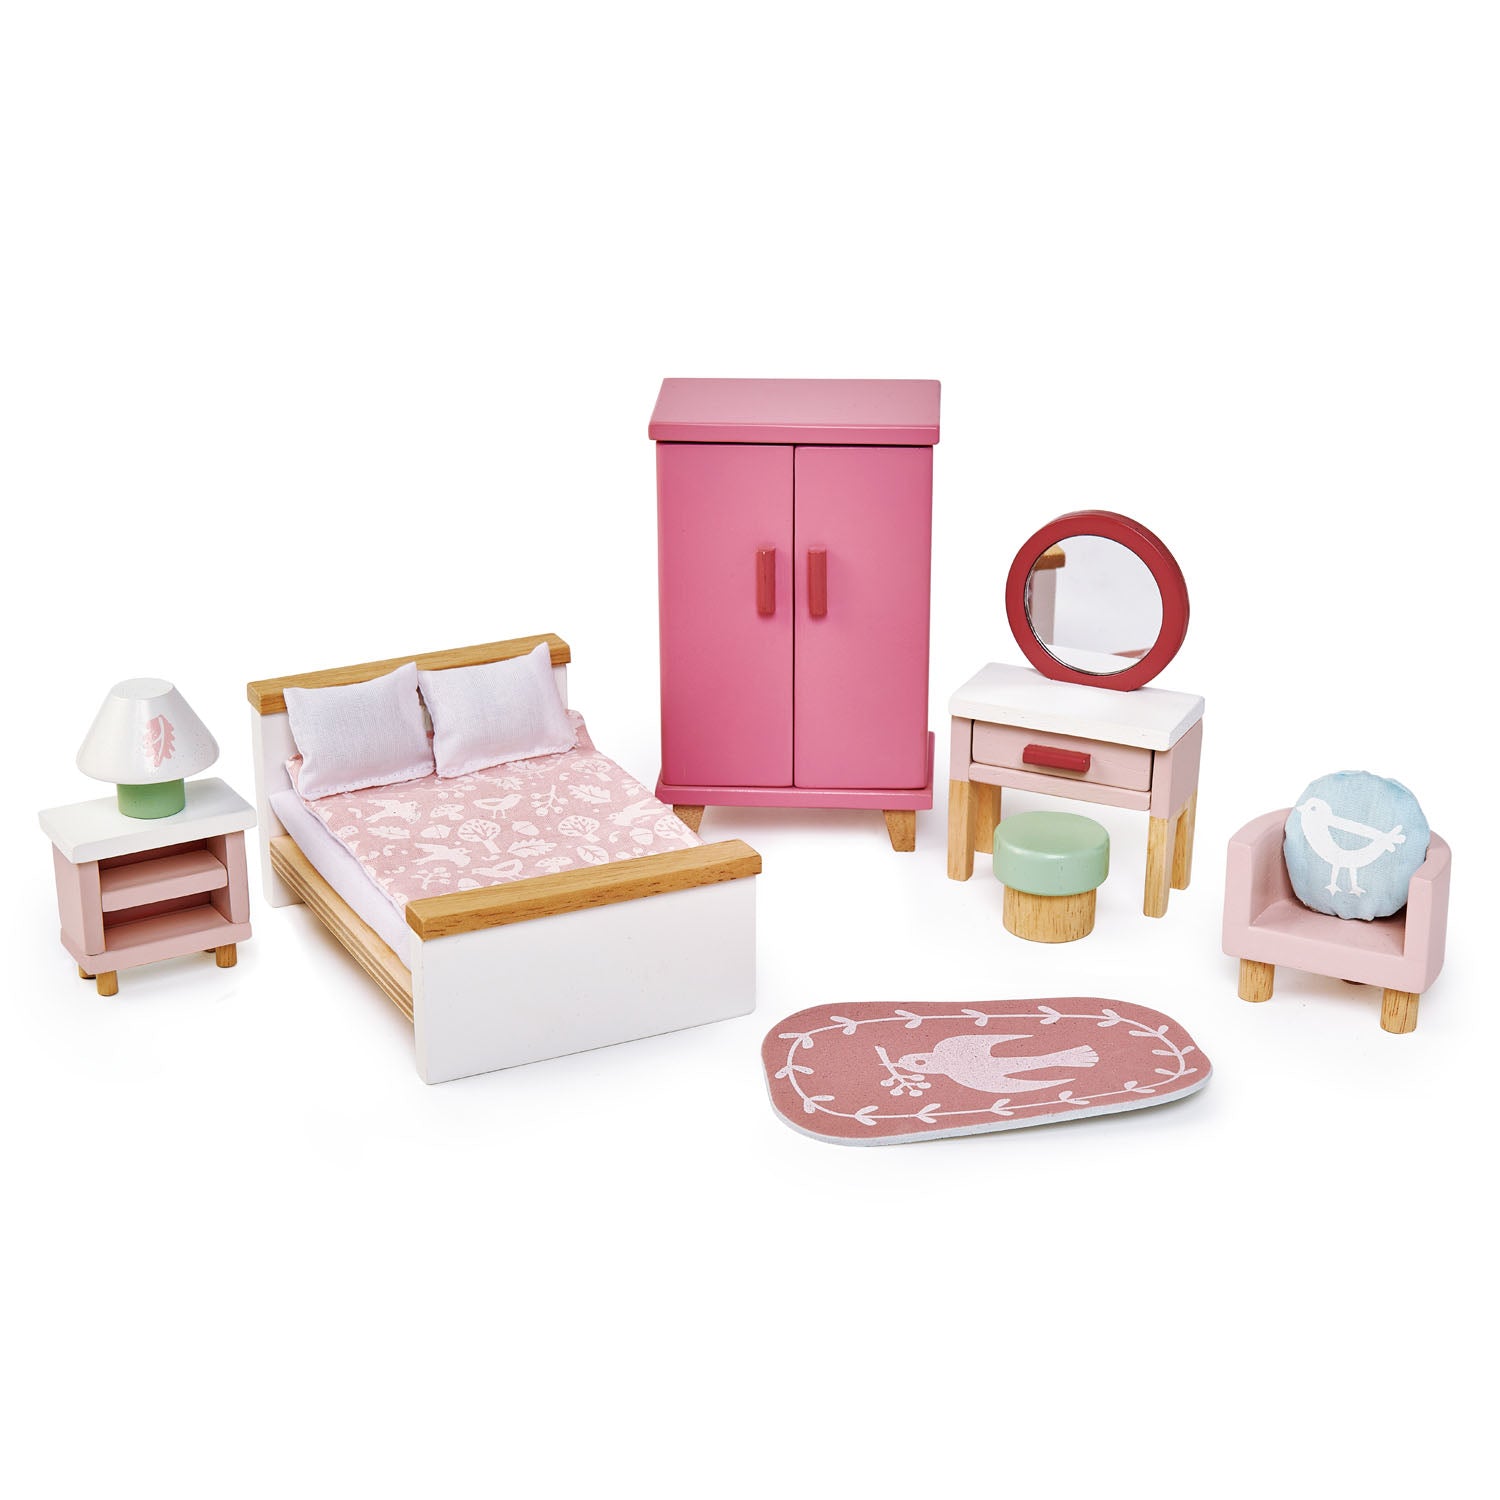 Dovetail Dolls House Bedroom Furniture.